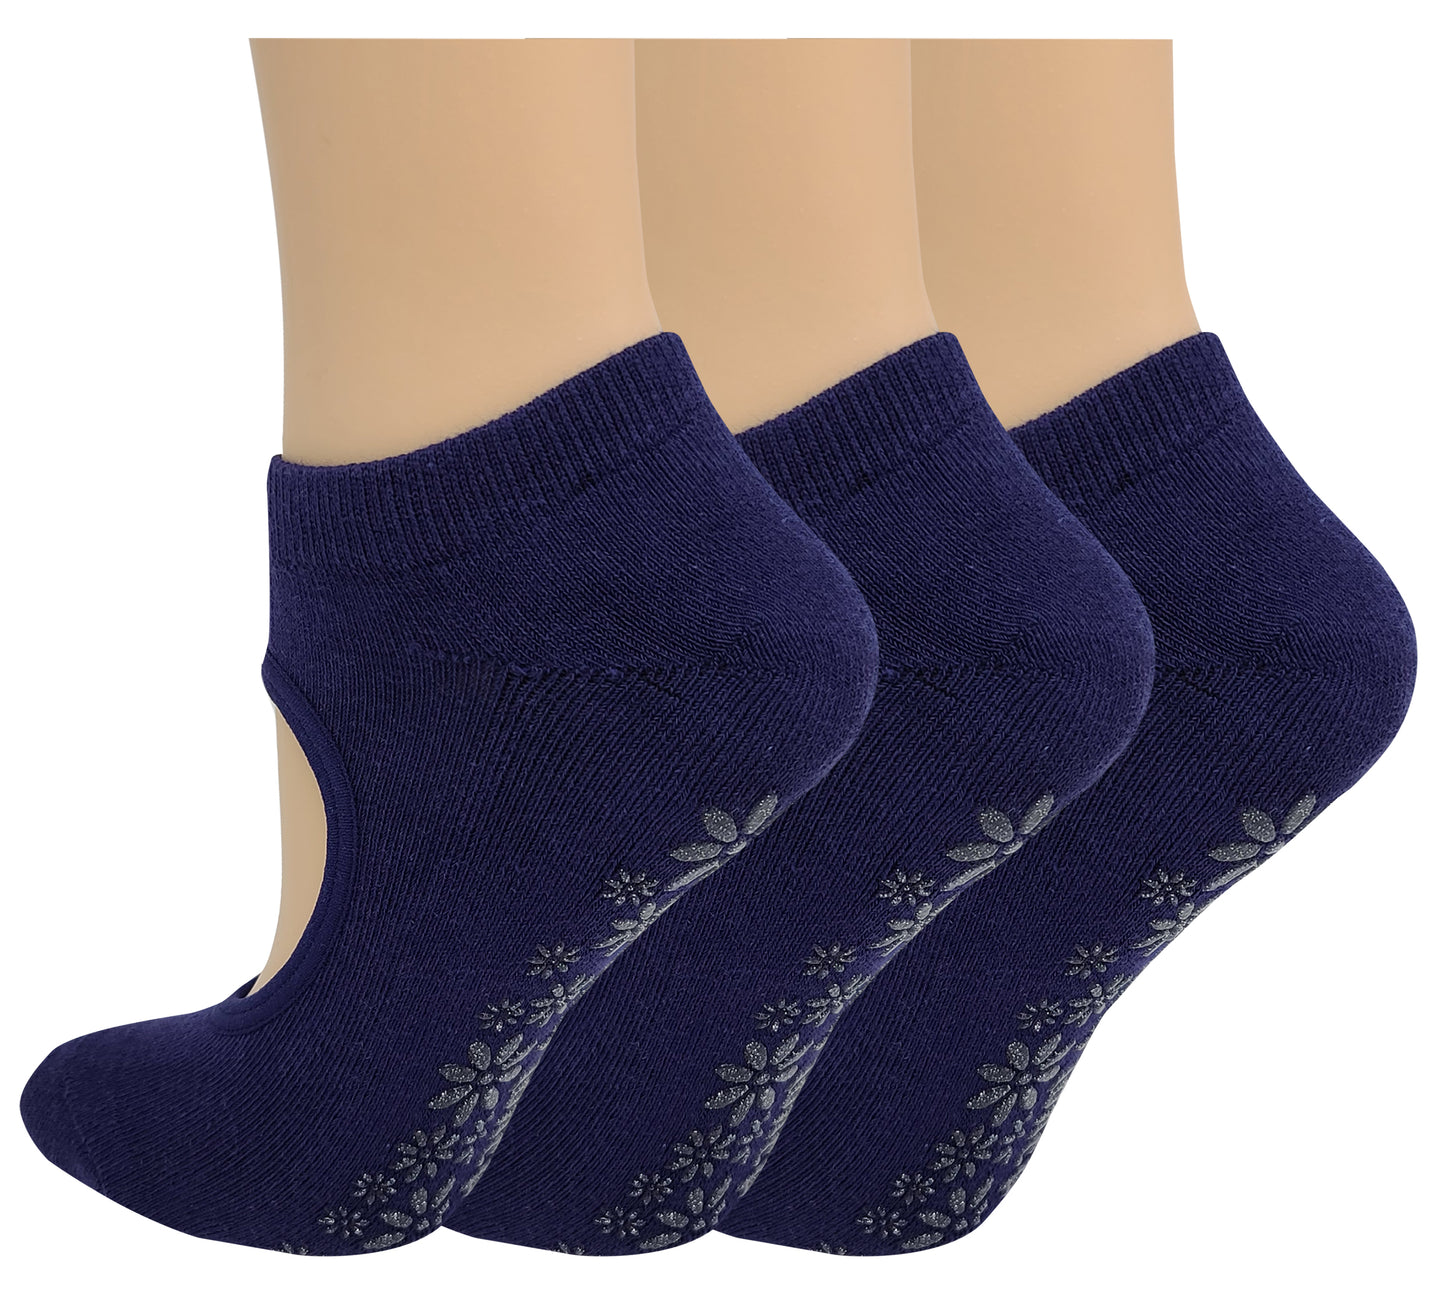 Yoga Cushion Socks with Grips | Non-Slip Pilates Ballet | For Women (3 Pairs)